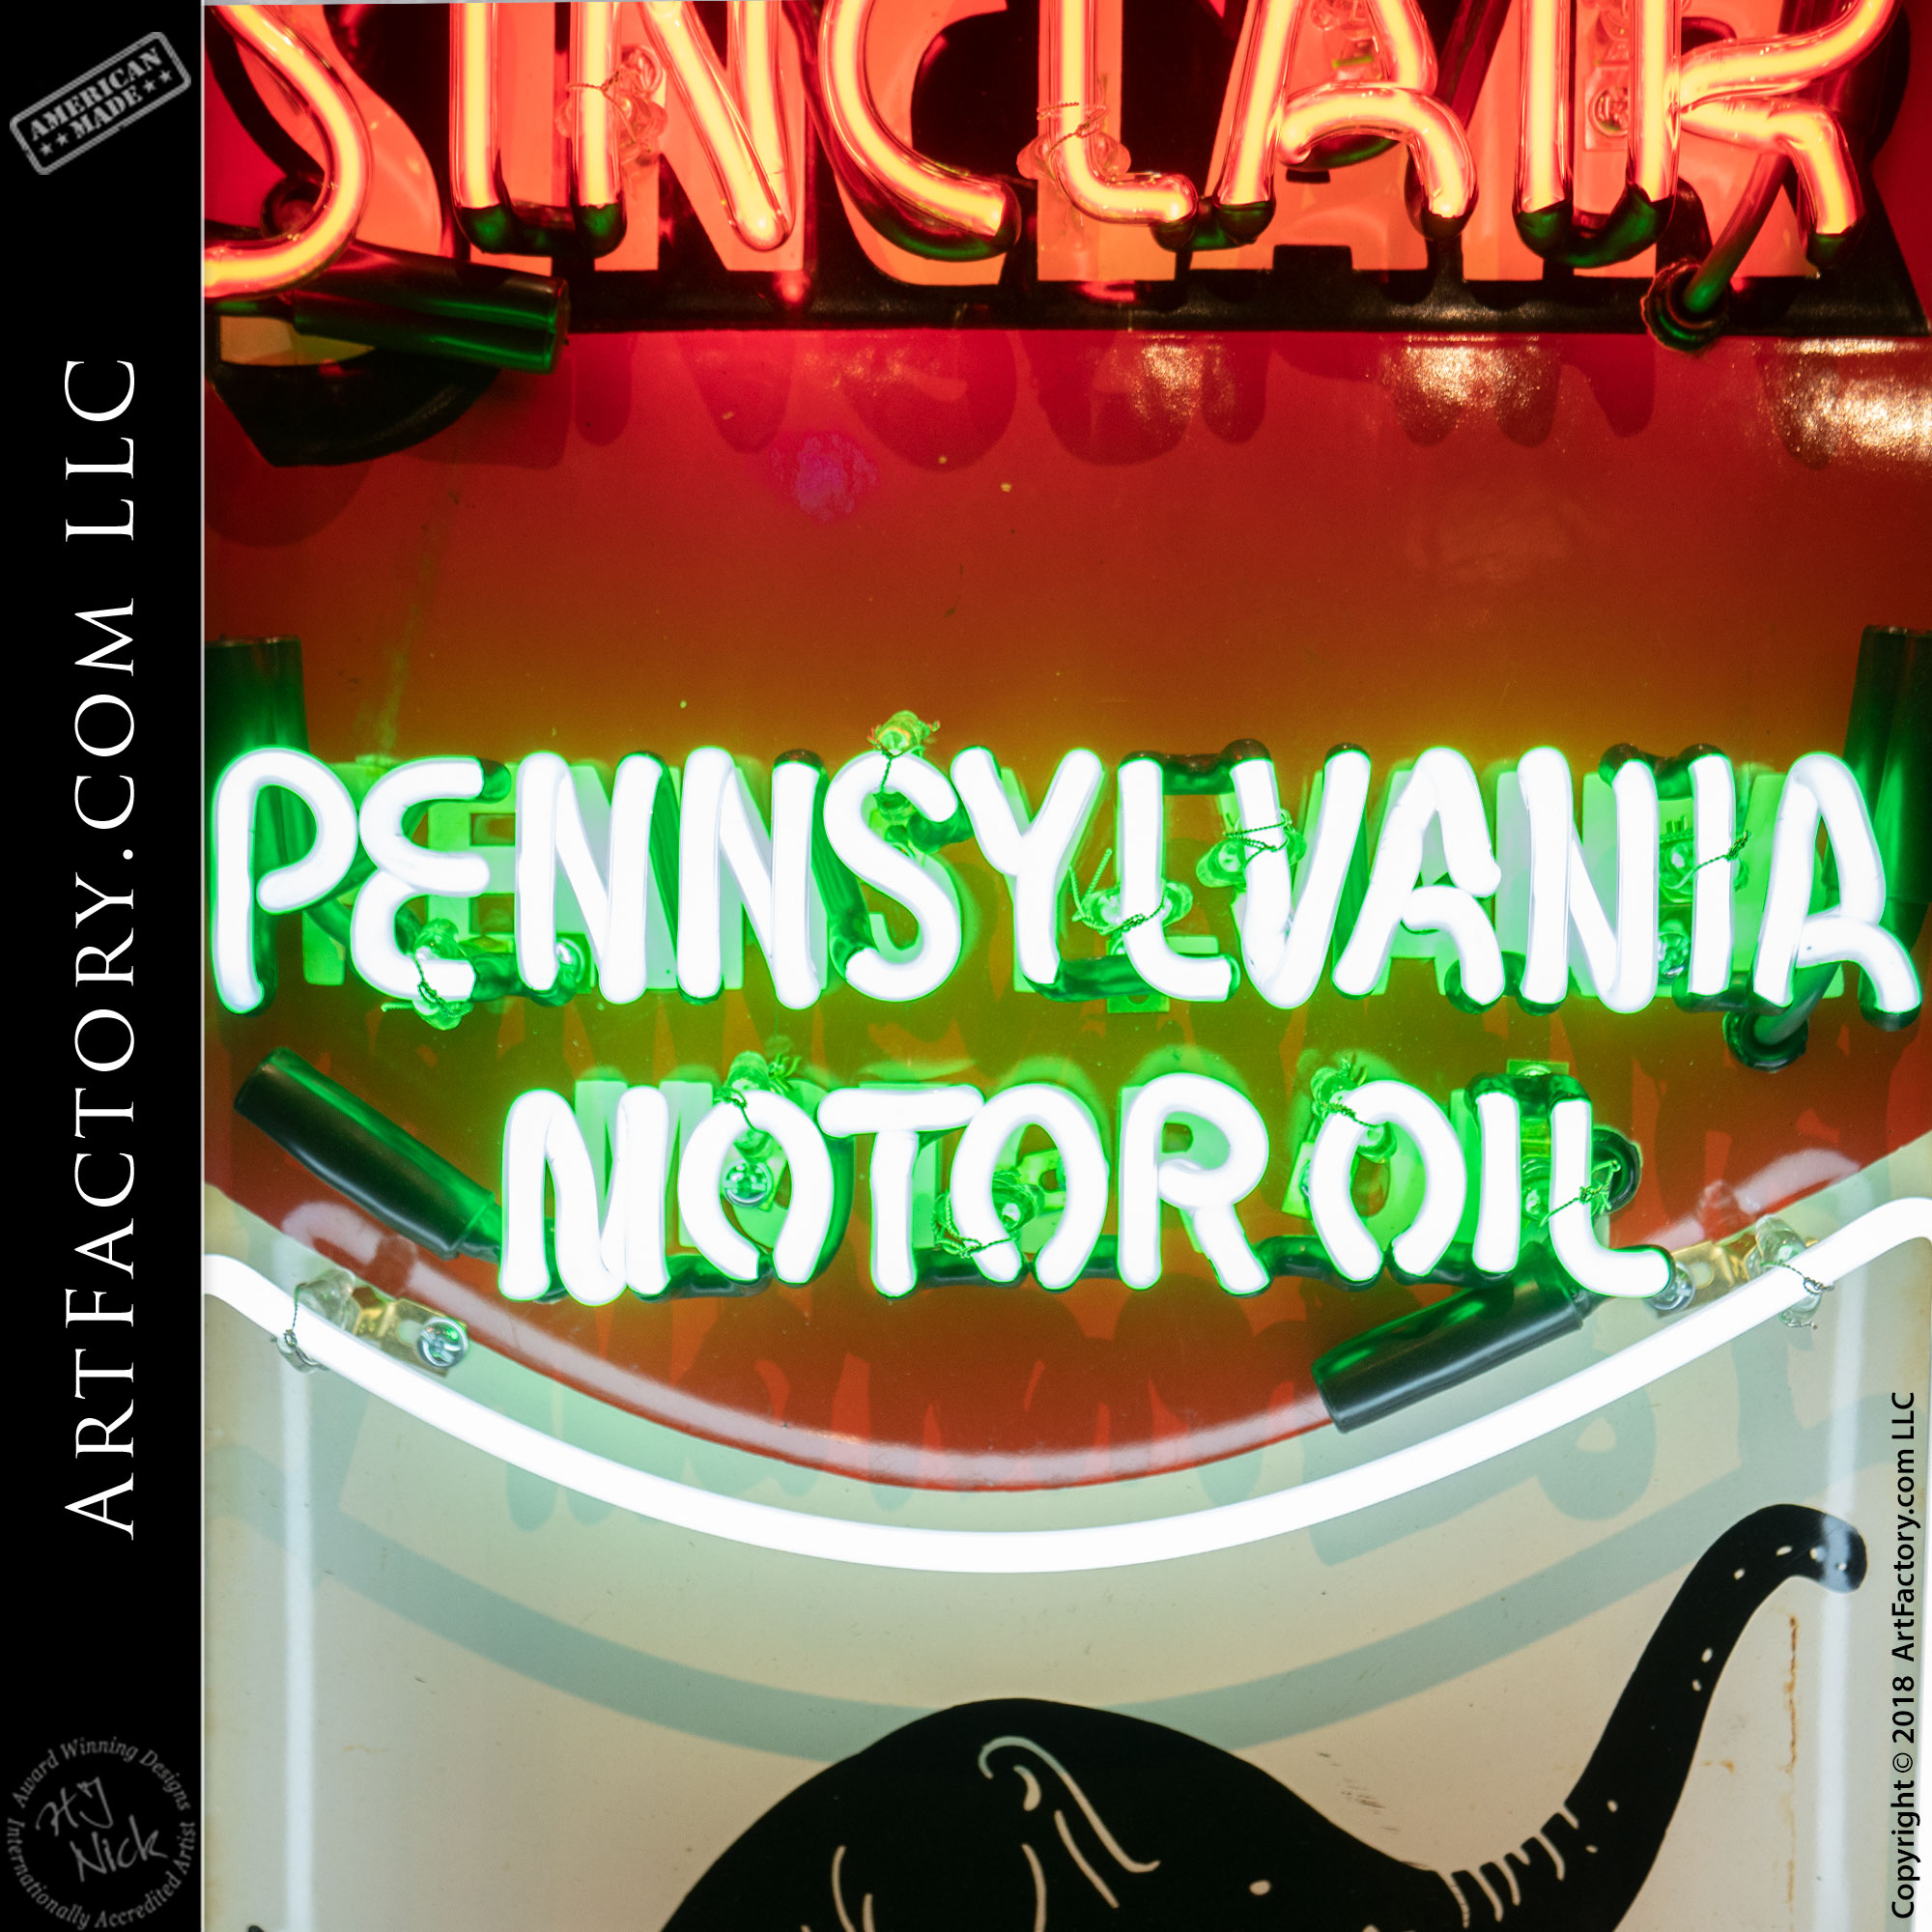 Sinclair Dinosaur Neon Sign: Vintage Pennsylvania Motor Oil